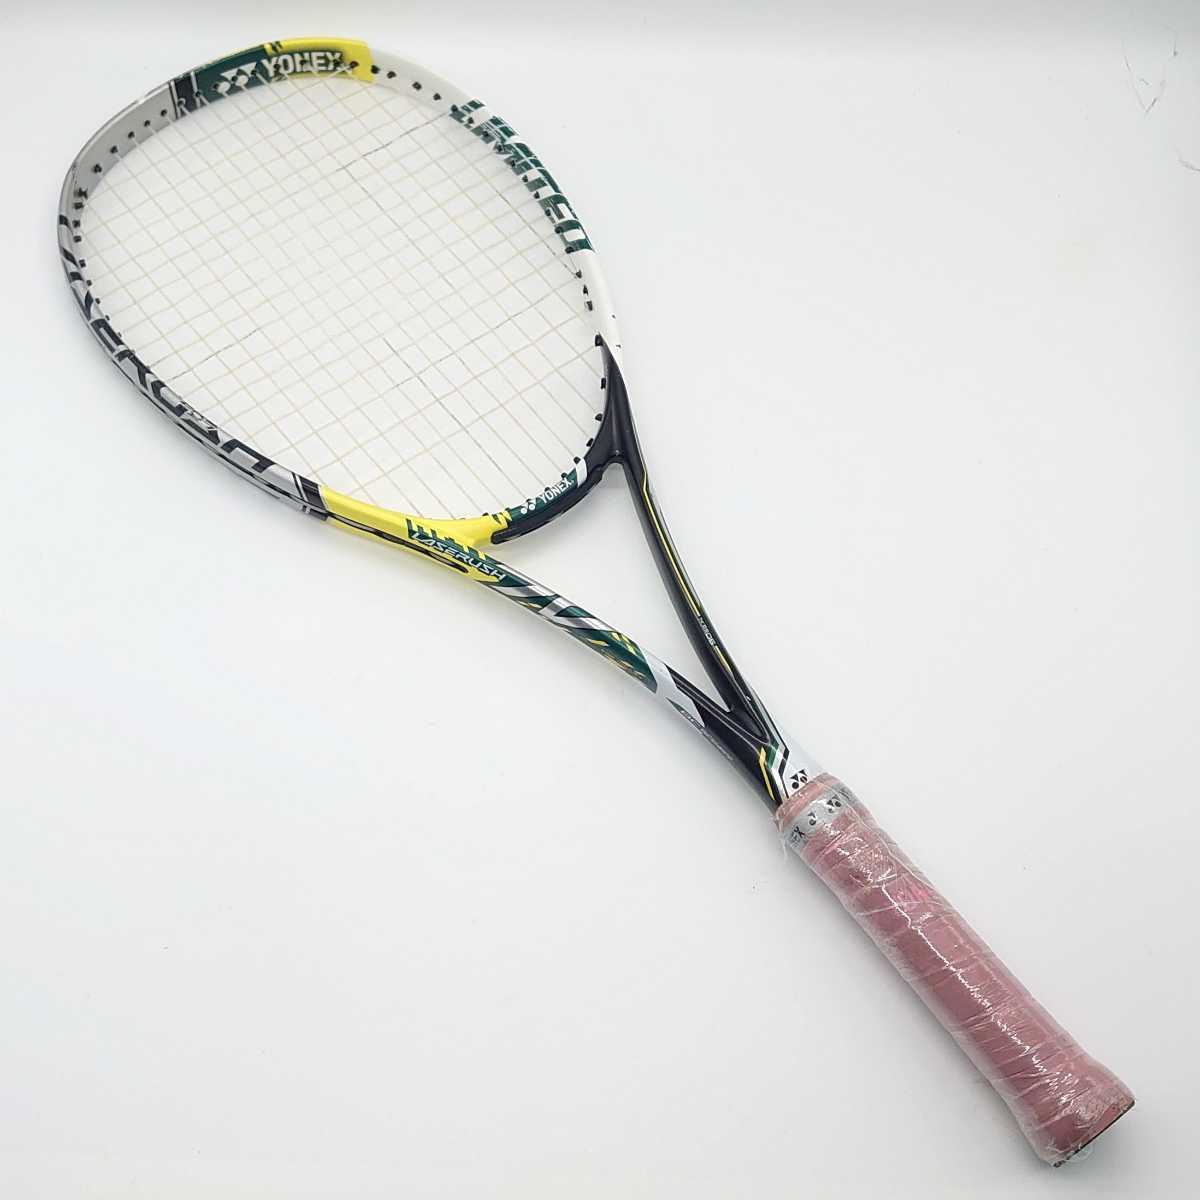 YONEX LASERUSH 7V LIMITED Yonex Laser Rush softball type tennis racket soft tennis softeni official sports bra ndotp-22x879